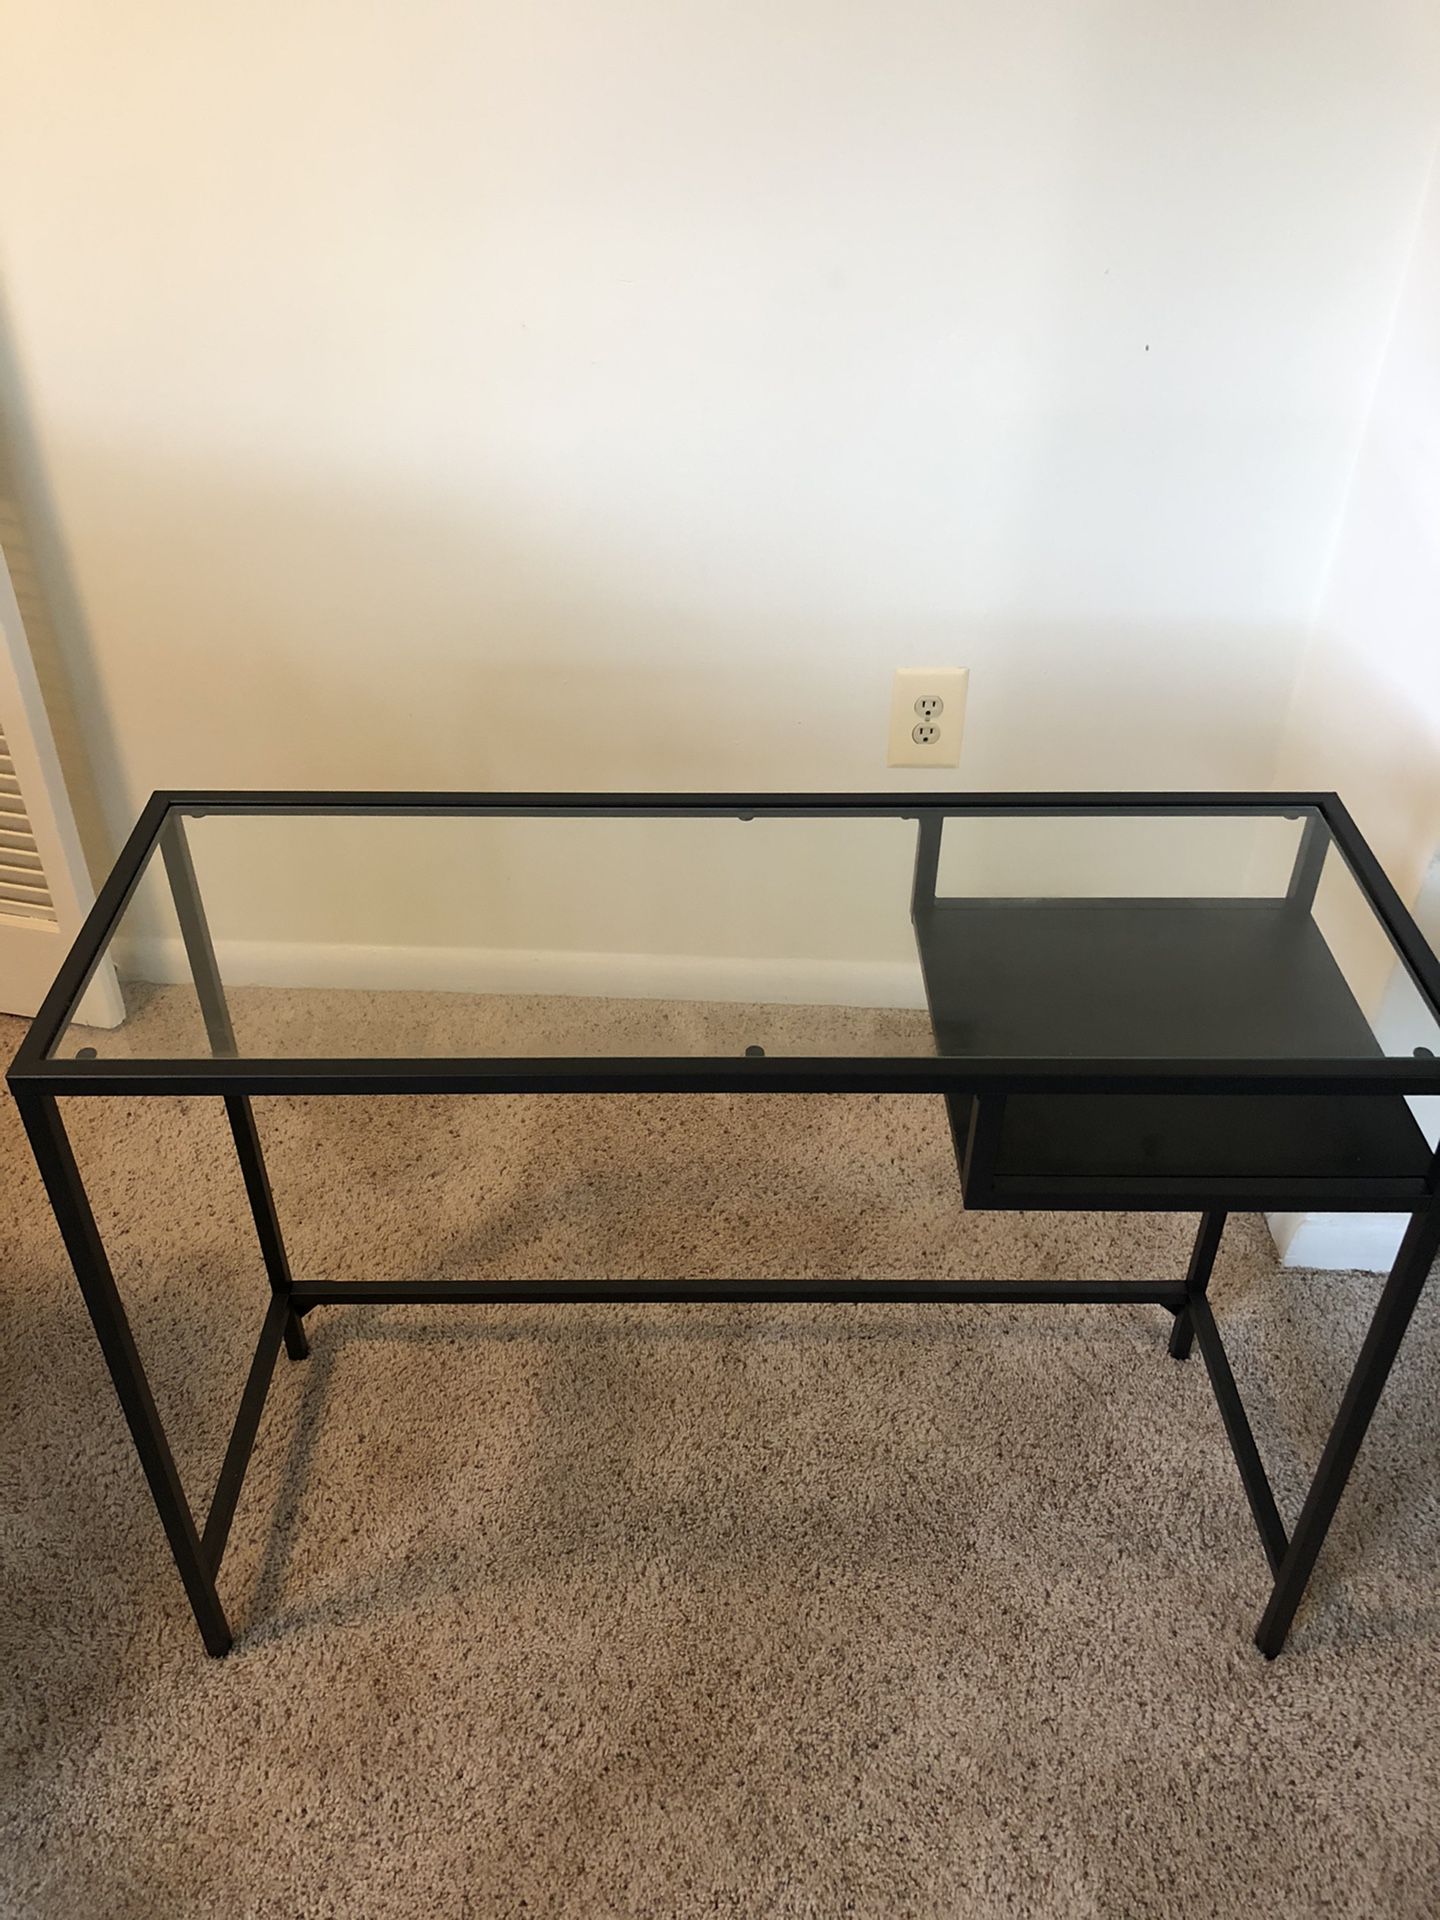 IKEA glass laptop table / desk